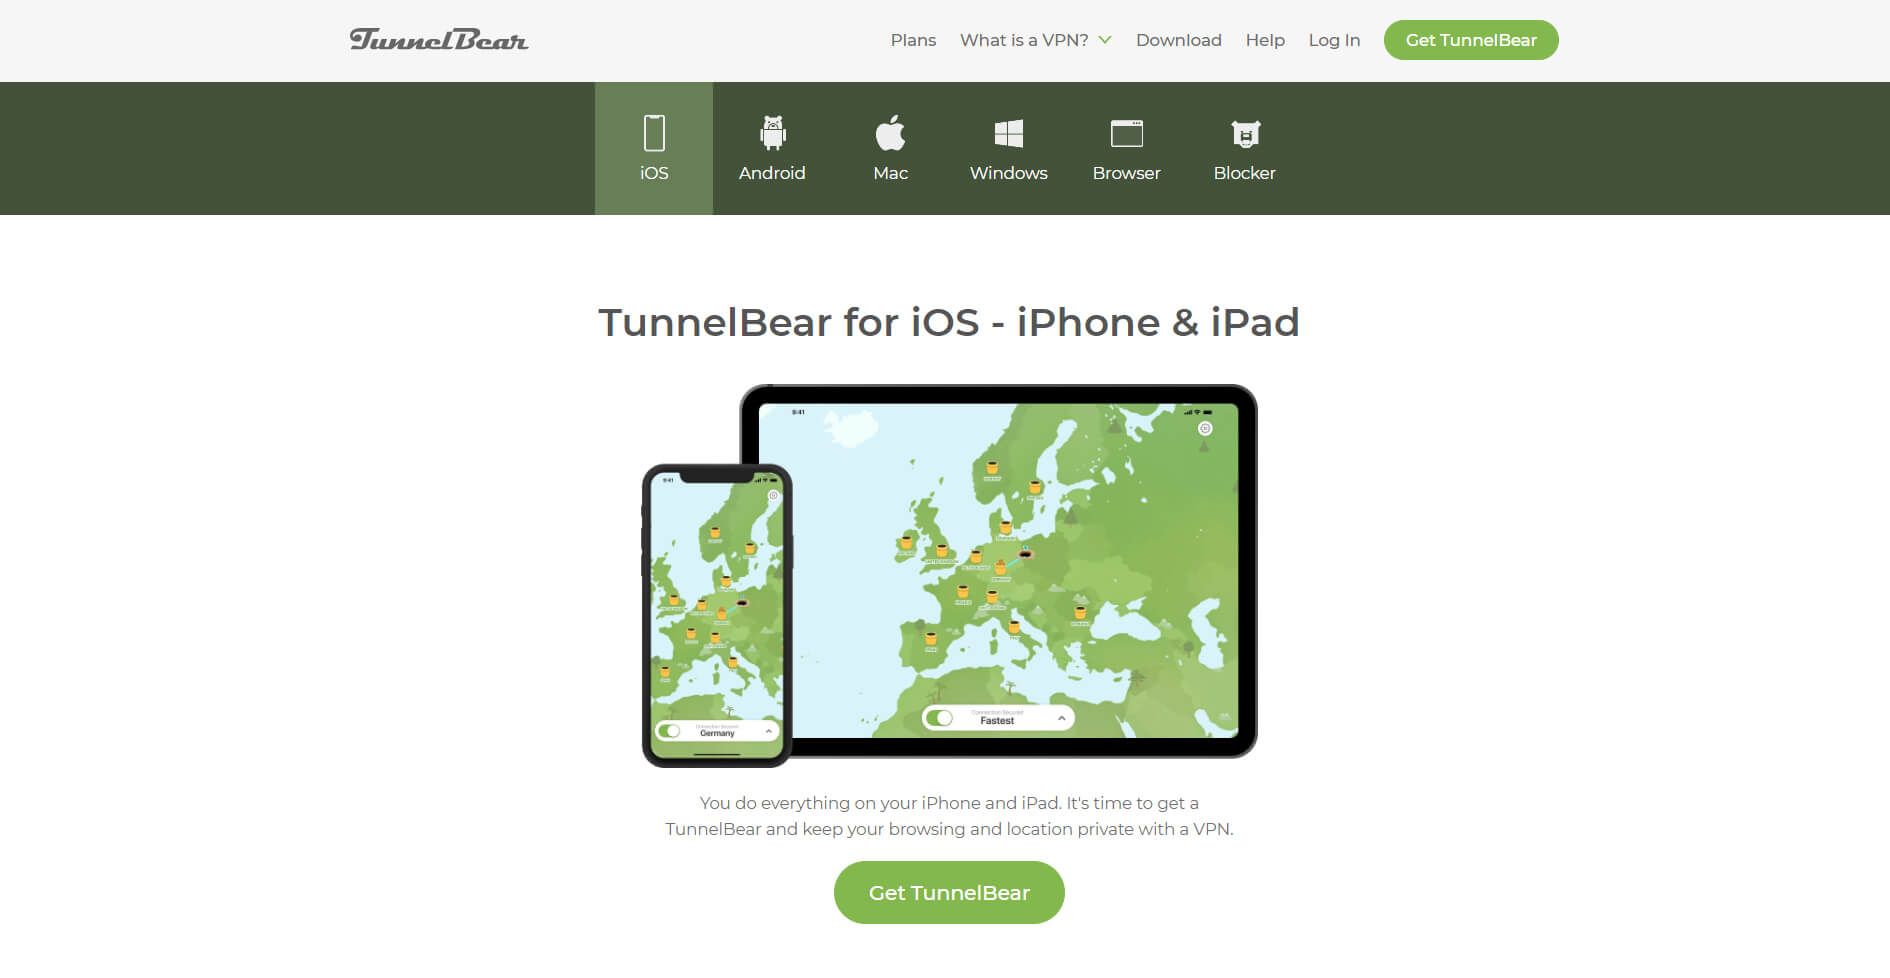 TunnelBear gratis para Android